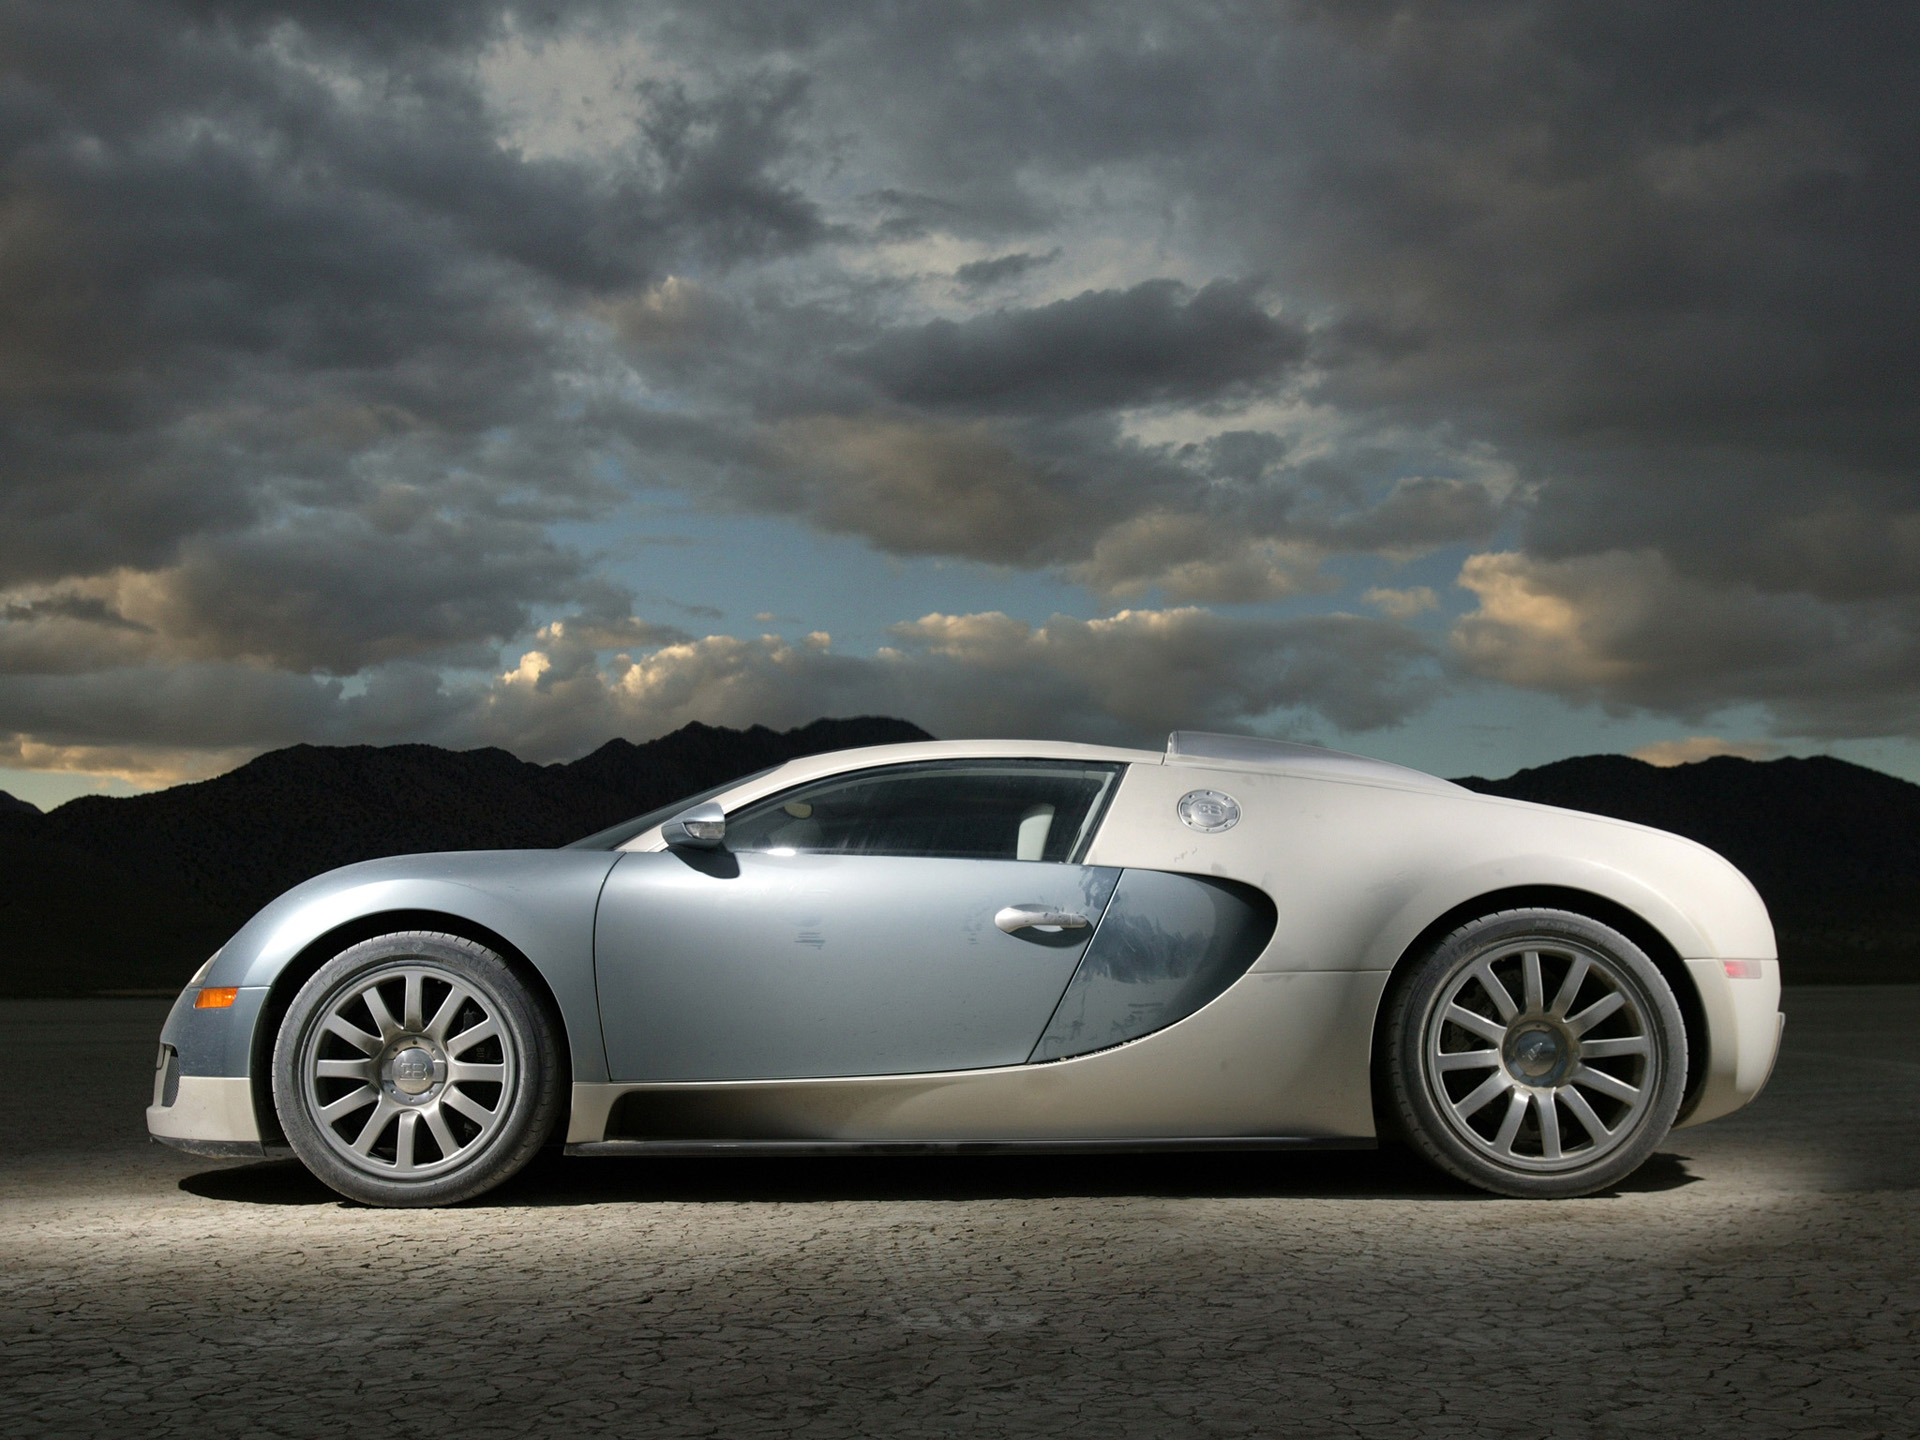  2005 Bugatti Veyron Wallpaper.